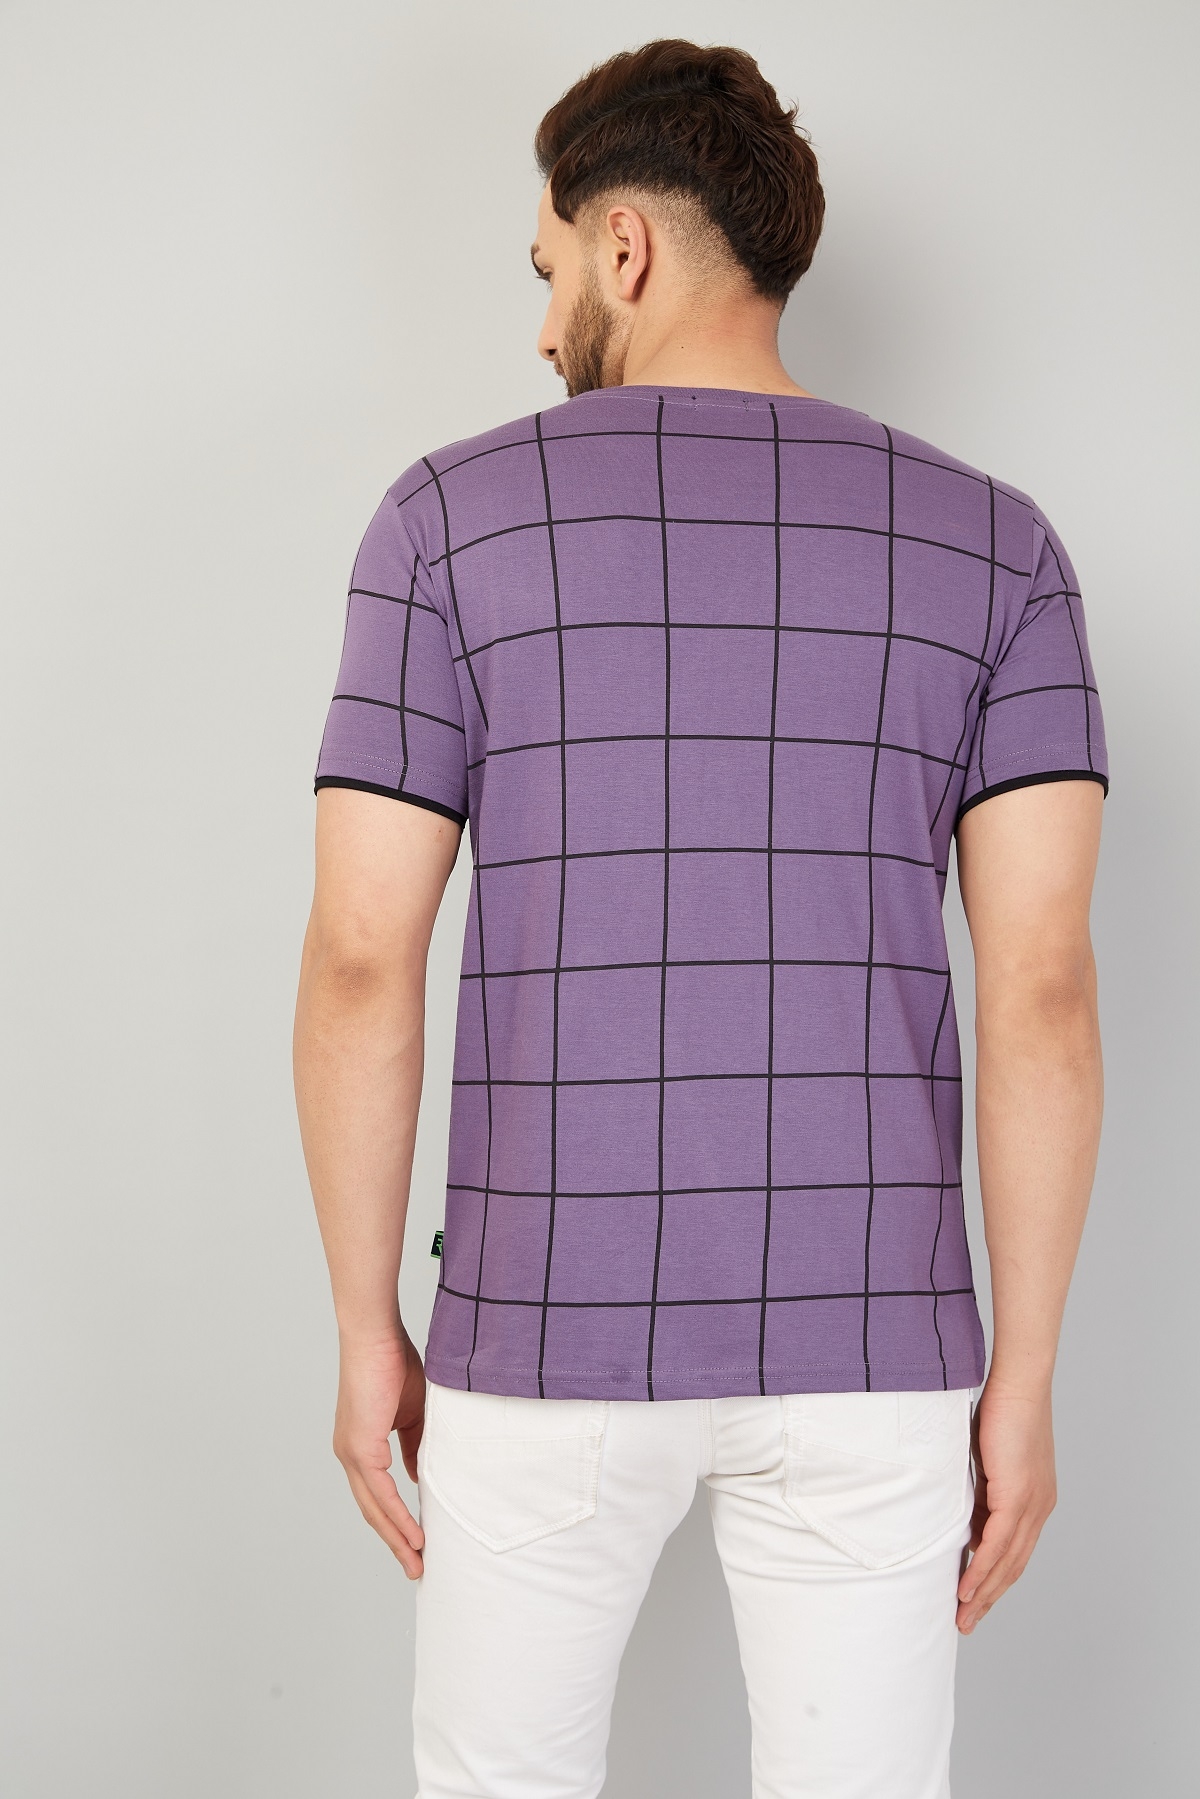 RodZen | Round neck Half Sleeve Purple All Over Printed Cotton Tshirt For Men & Boys 1